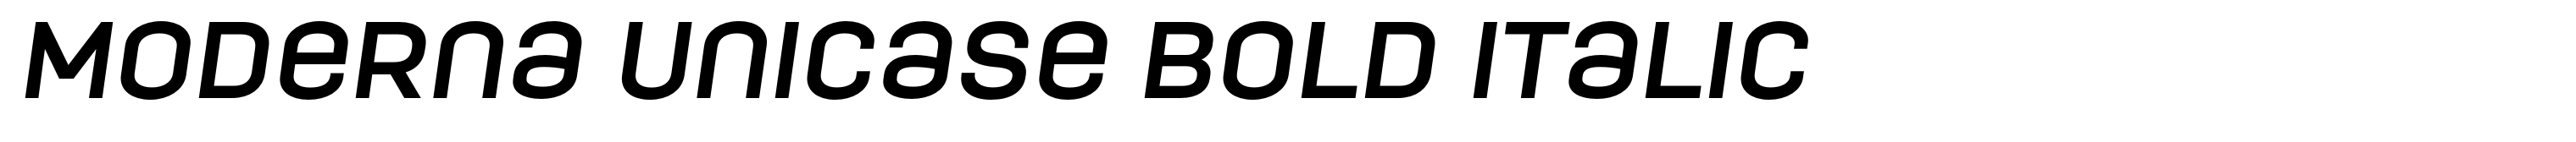 Moderna Unicase Bold Italic